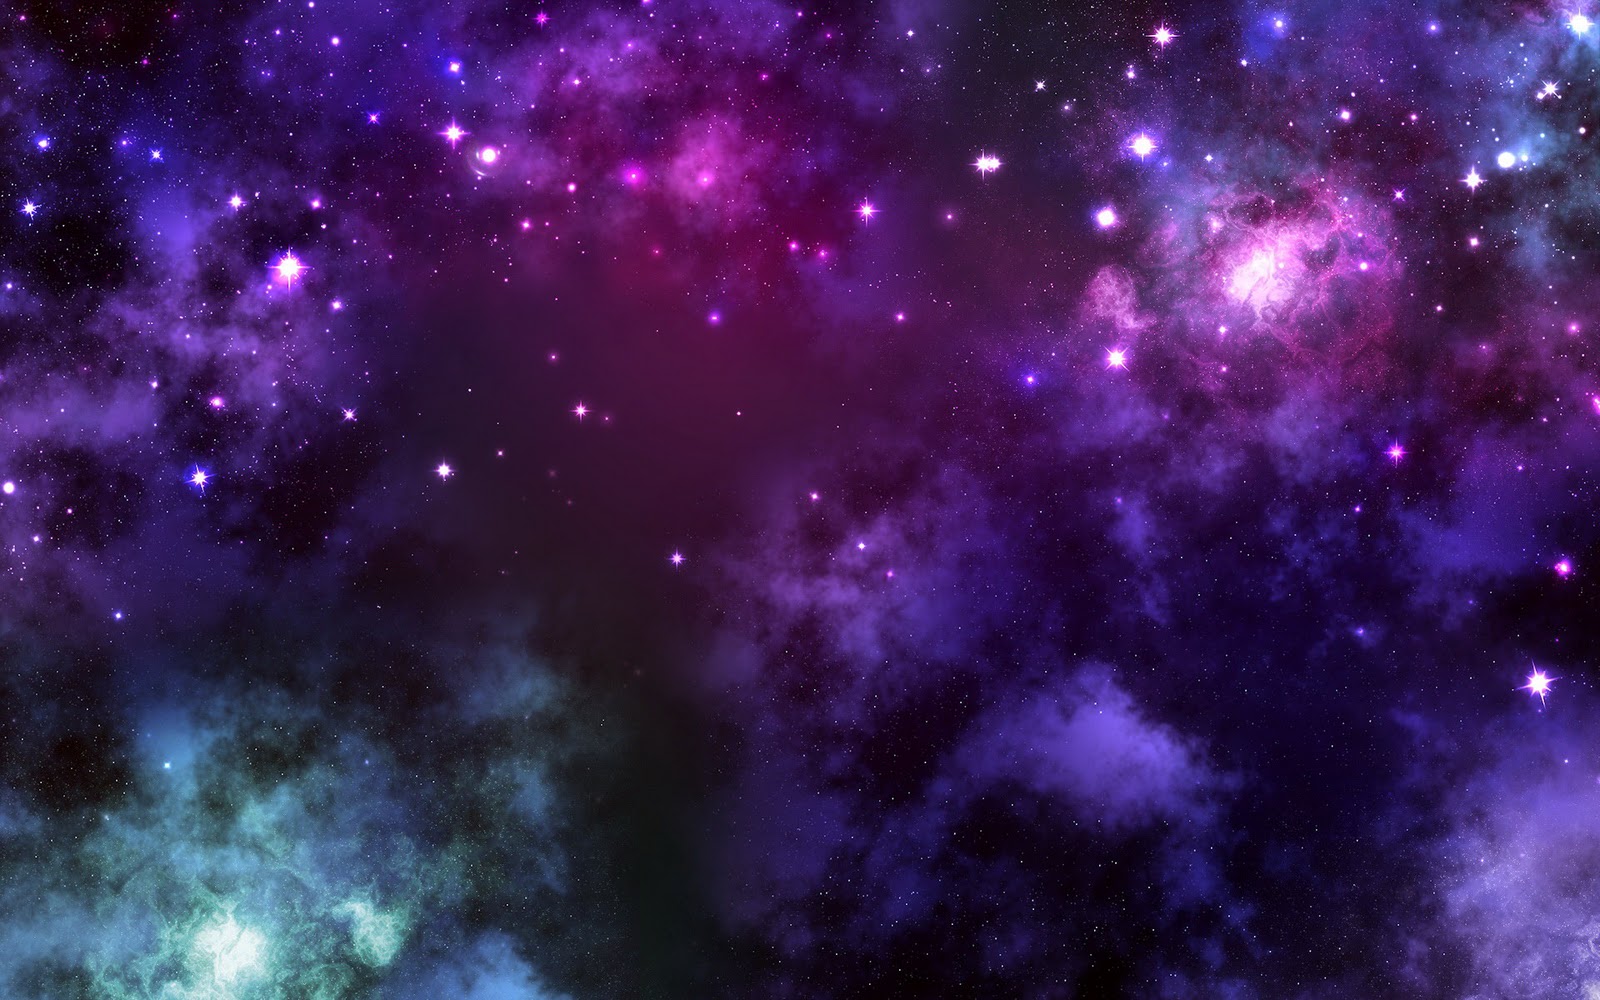 44+] Purple and Blue Galaxy Wallpaper - WallpaperSafari